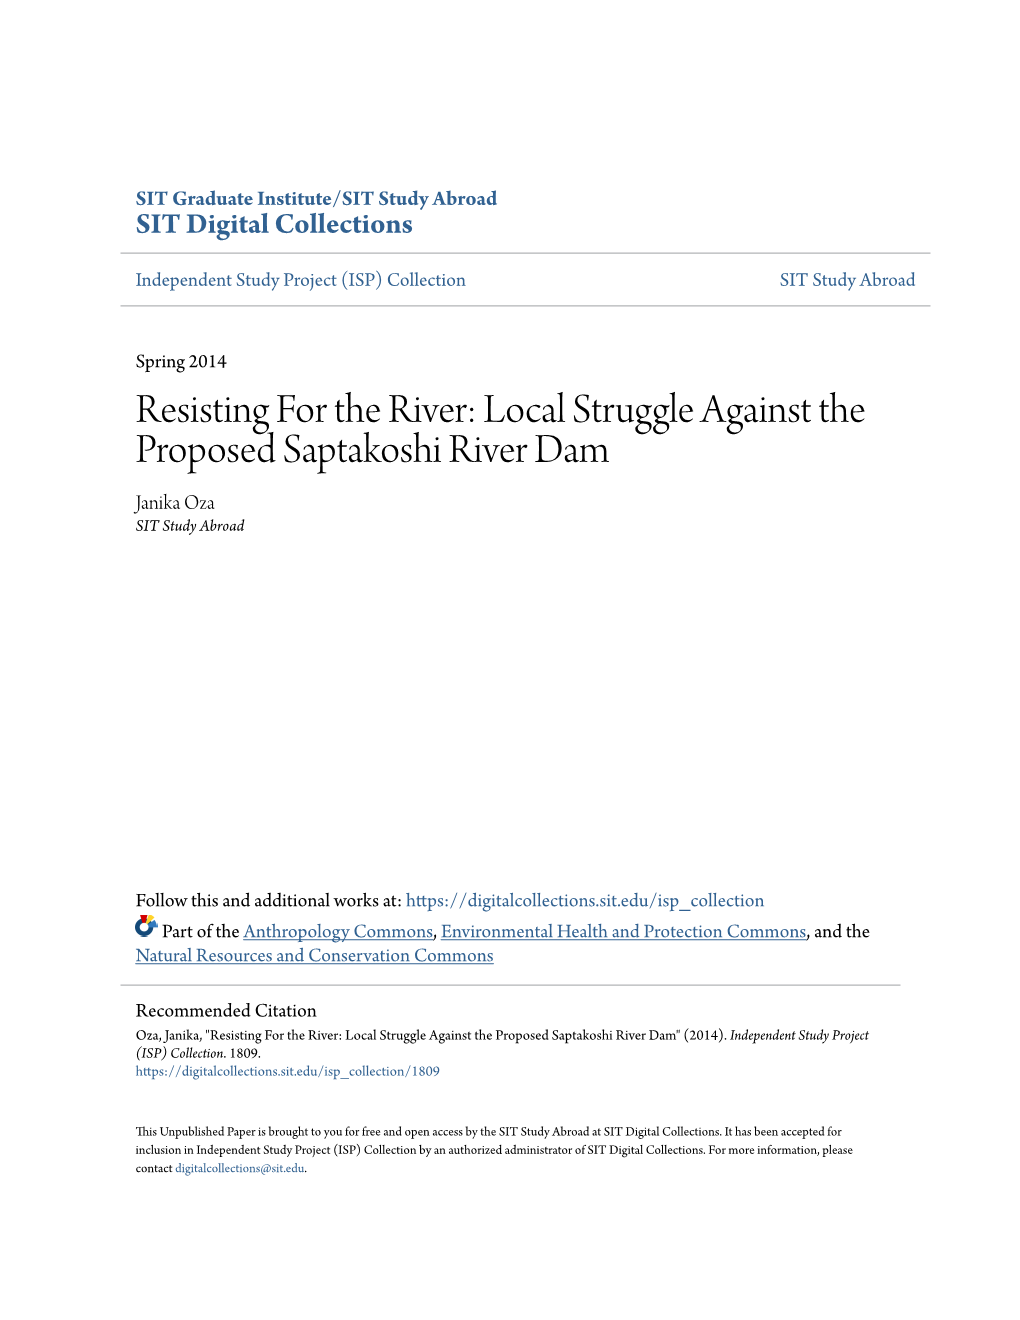 Local Struggle Against the Proposed Saptakoshi River Dam Janika Oza SIT Study Abroad